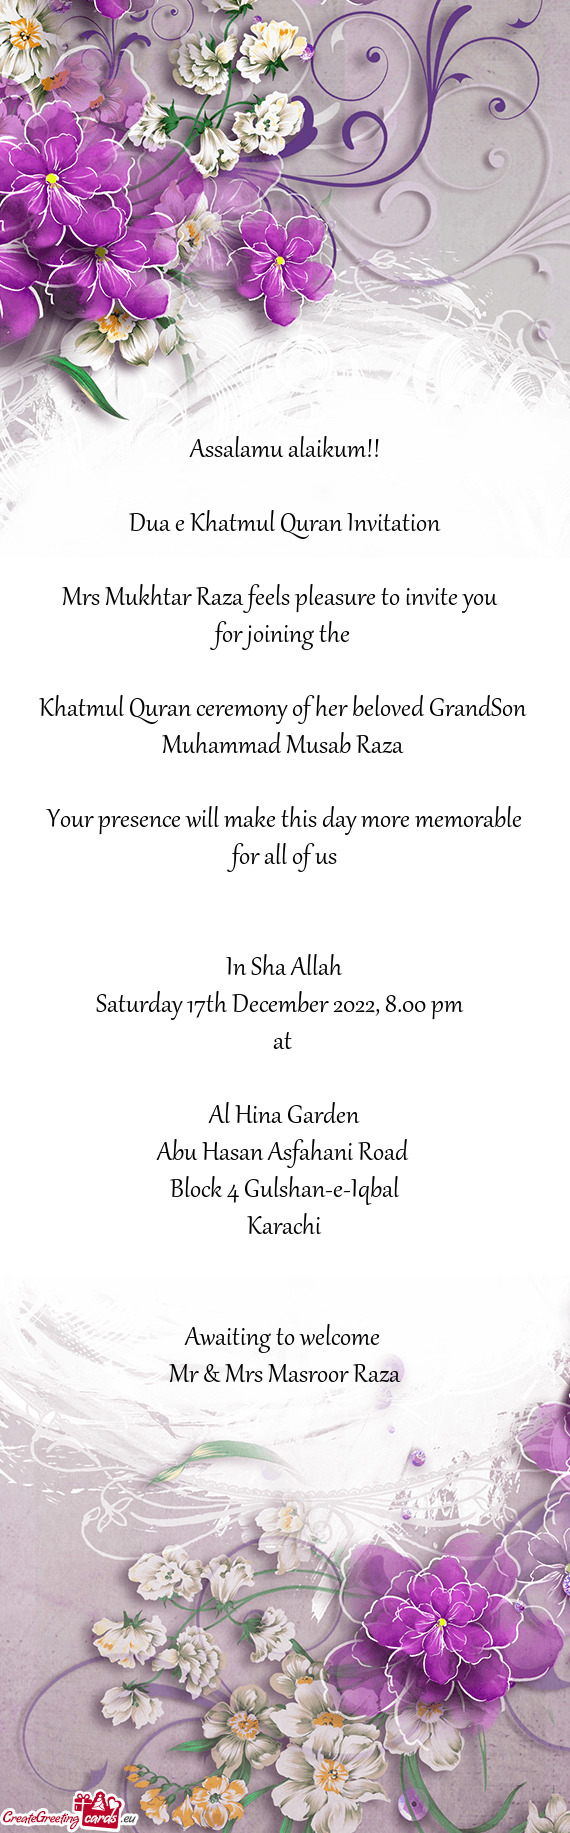 Mrs Mukhtar Raza feels pleasure to invite you